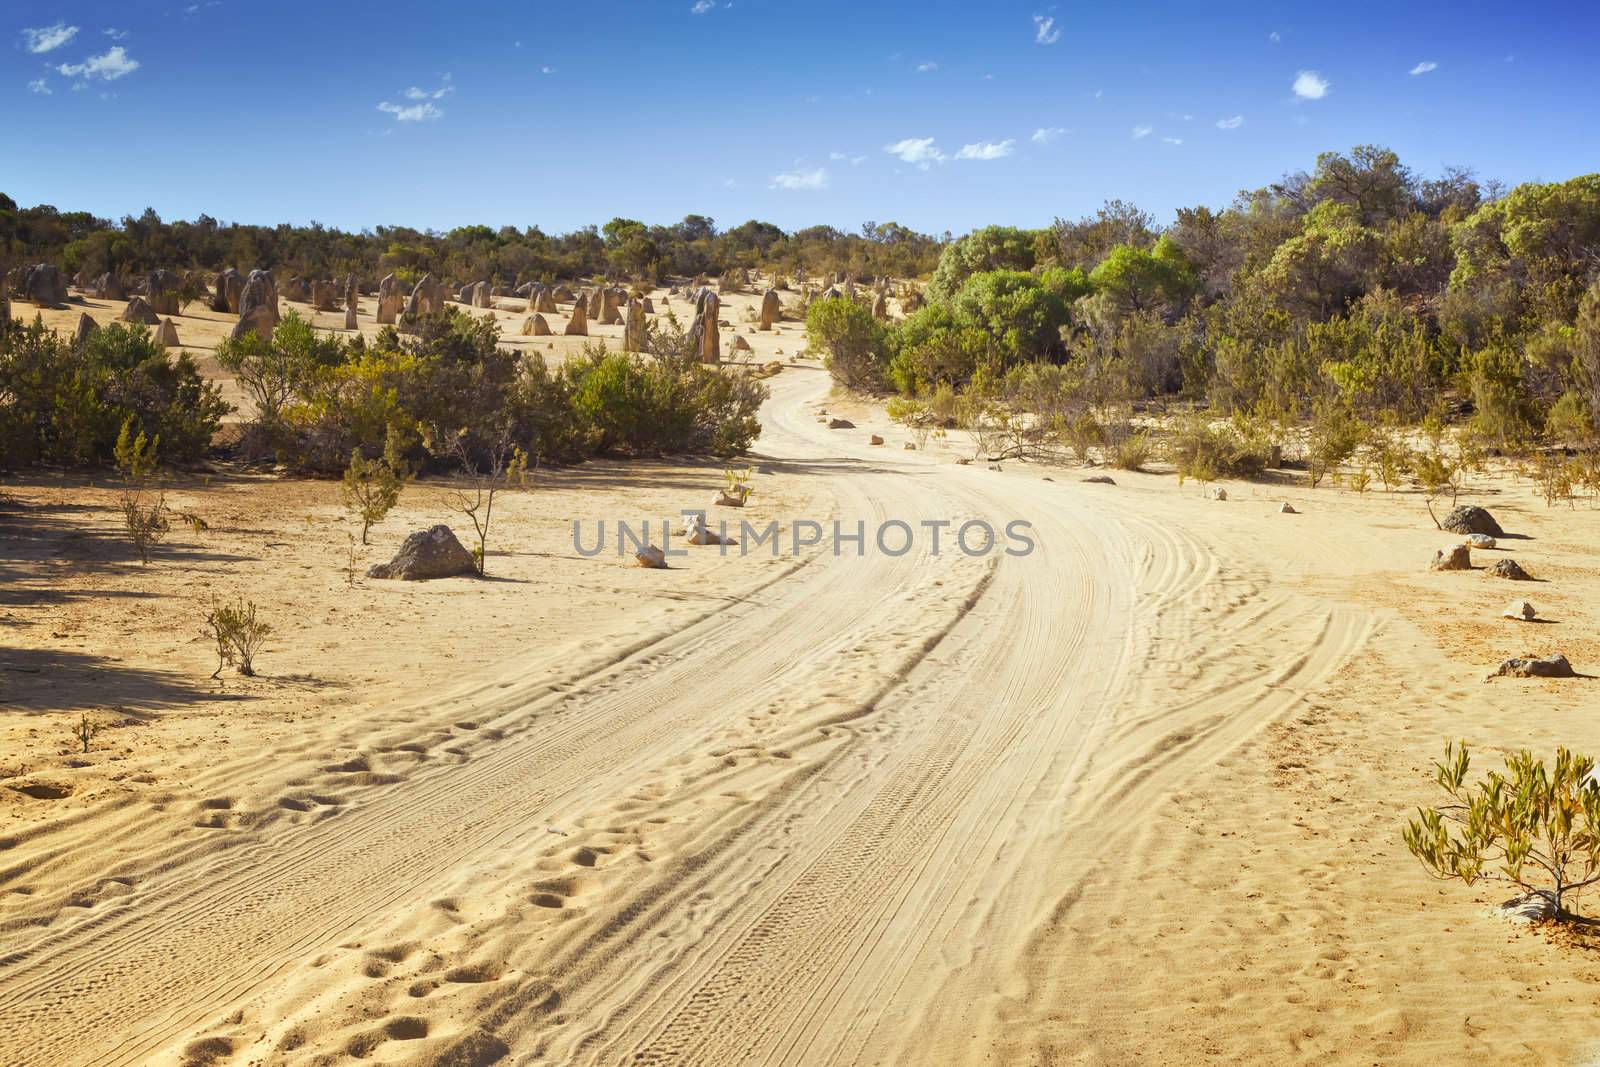 An image of a desert road in Australia